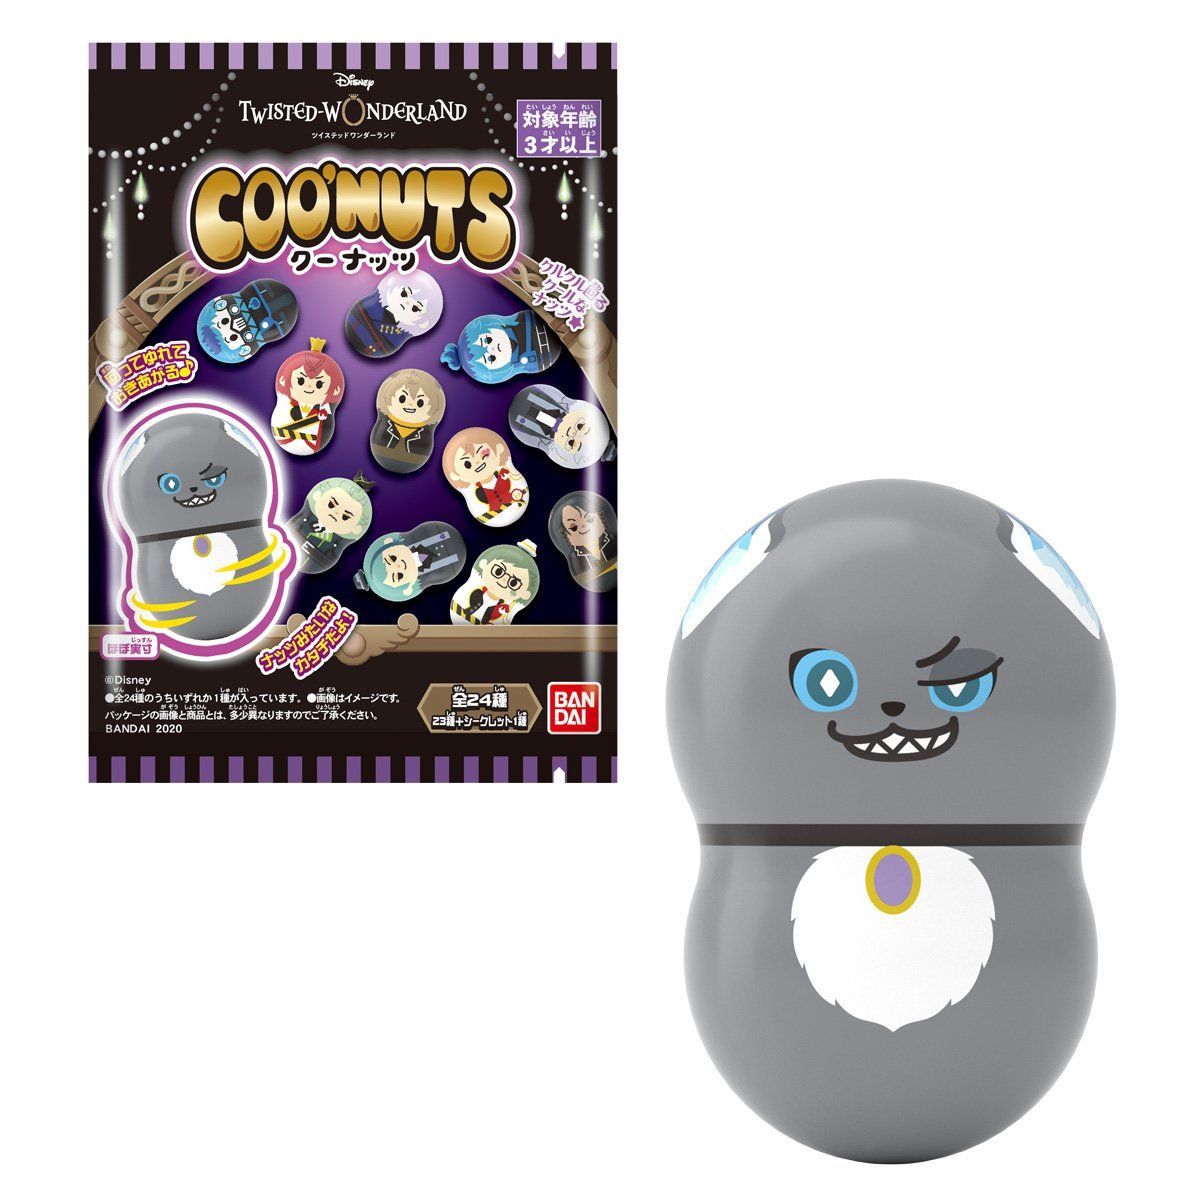 Coo Nuts Twisted Wonderland 個入 ディズニーキャラクター 趣味 コレクション バンダイナムコグループ公式通販サイト